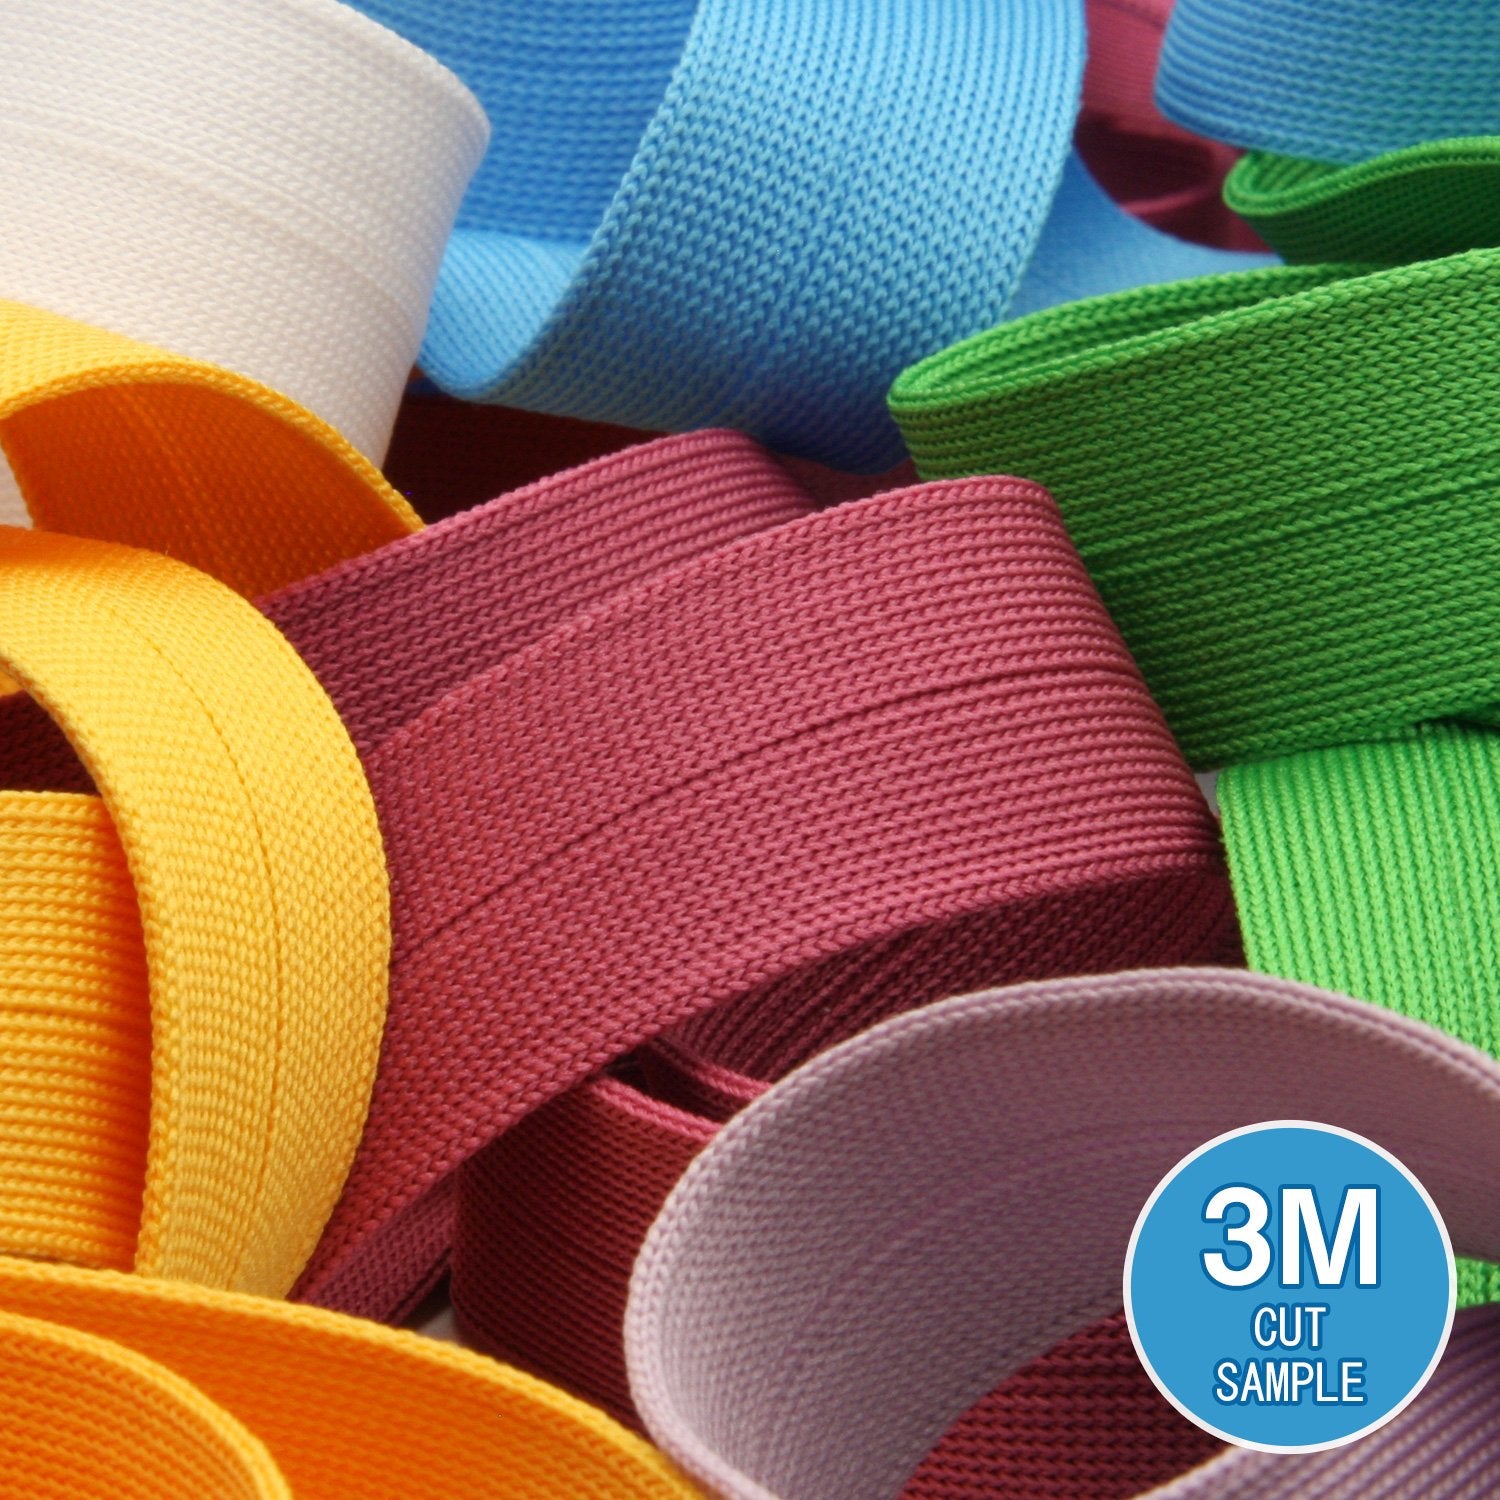 FUJIYAMA RIBBON [Sample] Polyester Thin Knit Binder Tape (FY-210B) 9x9mm 3 Meters Cut